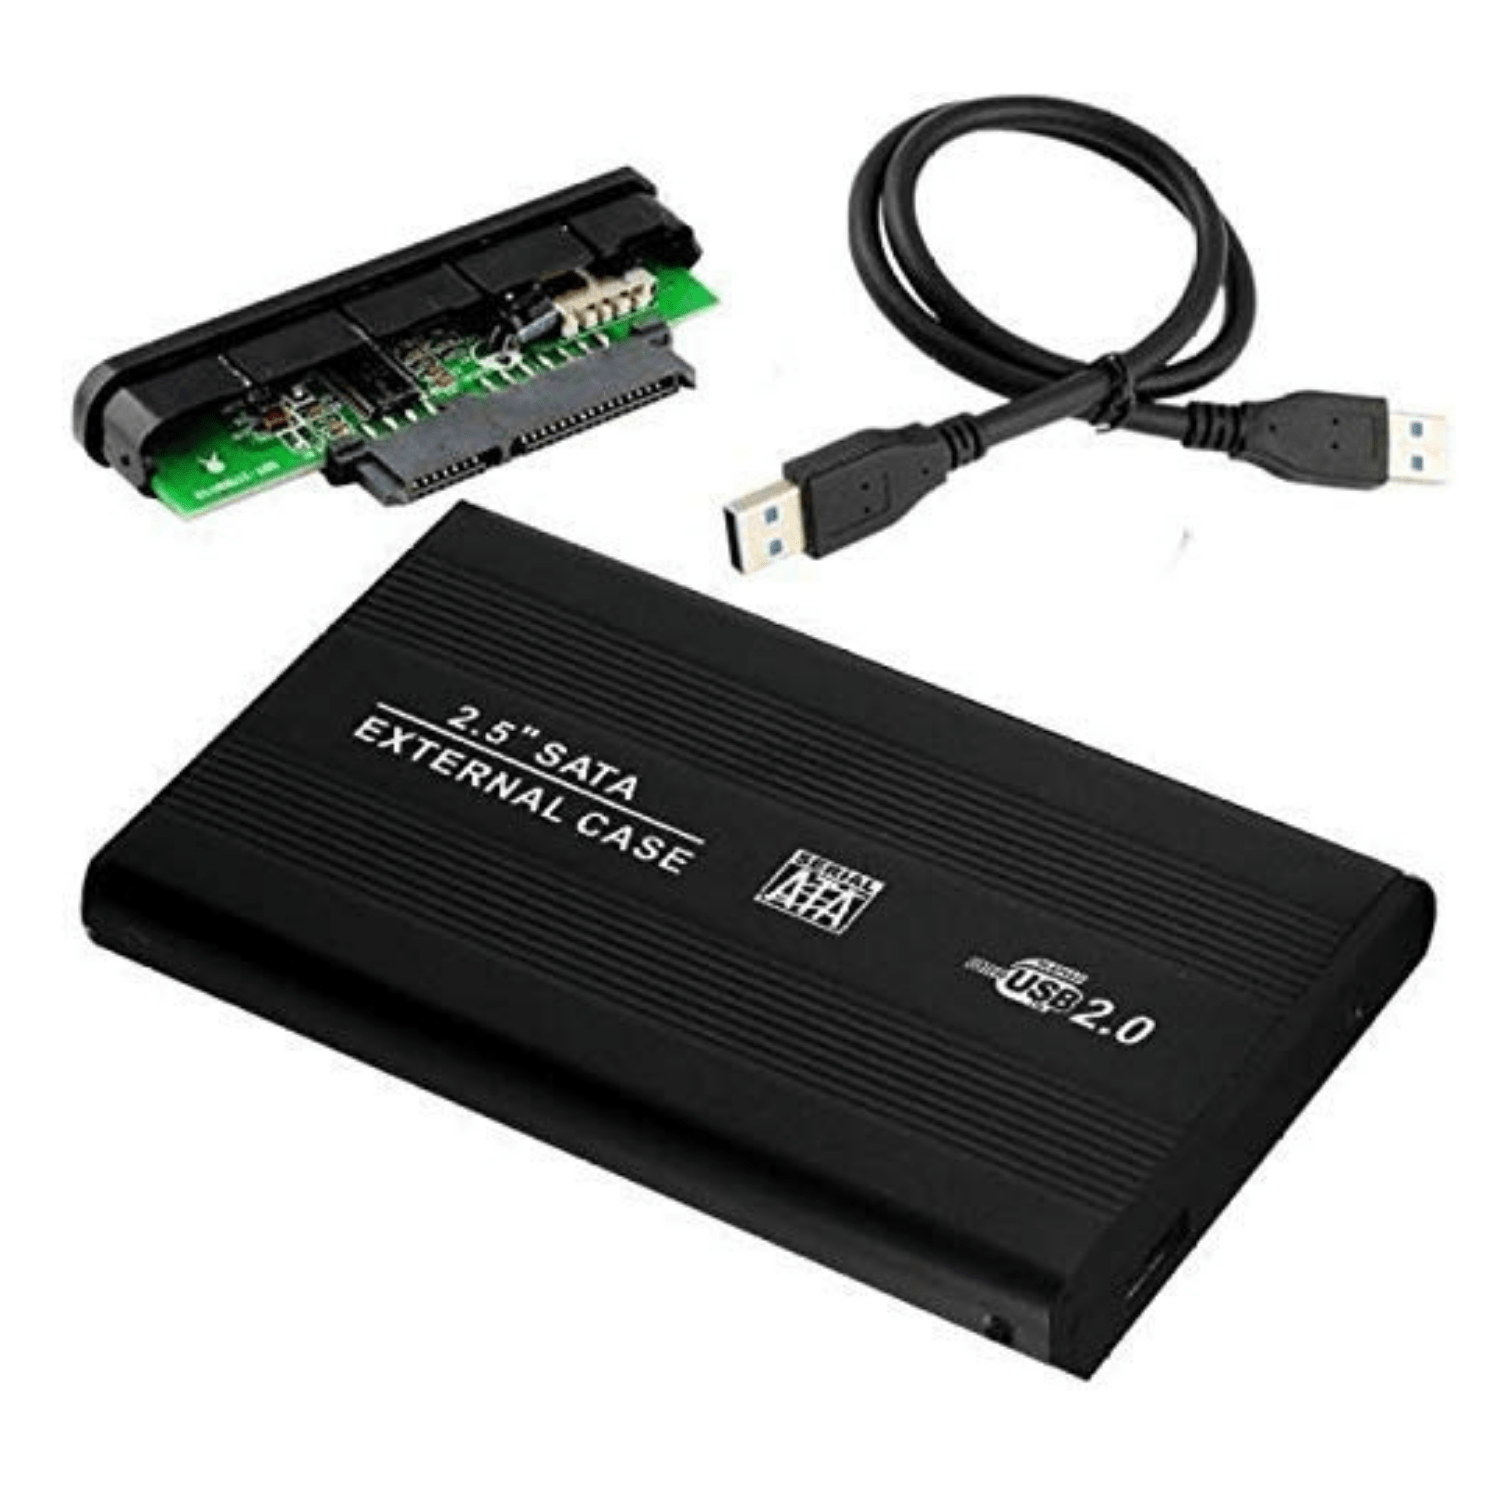 External Case HDD USB 2.0 Enclosure hard disk SATA 2.5 inch HDD USB2.0  External Hard